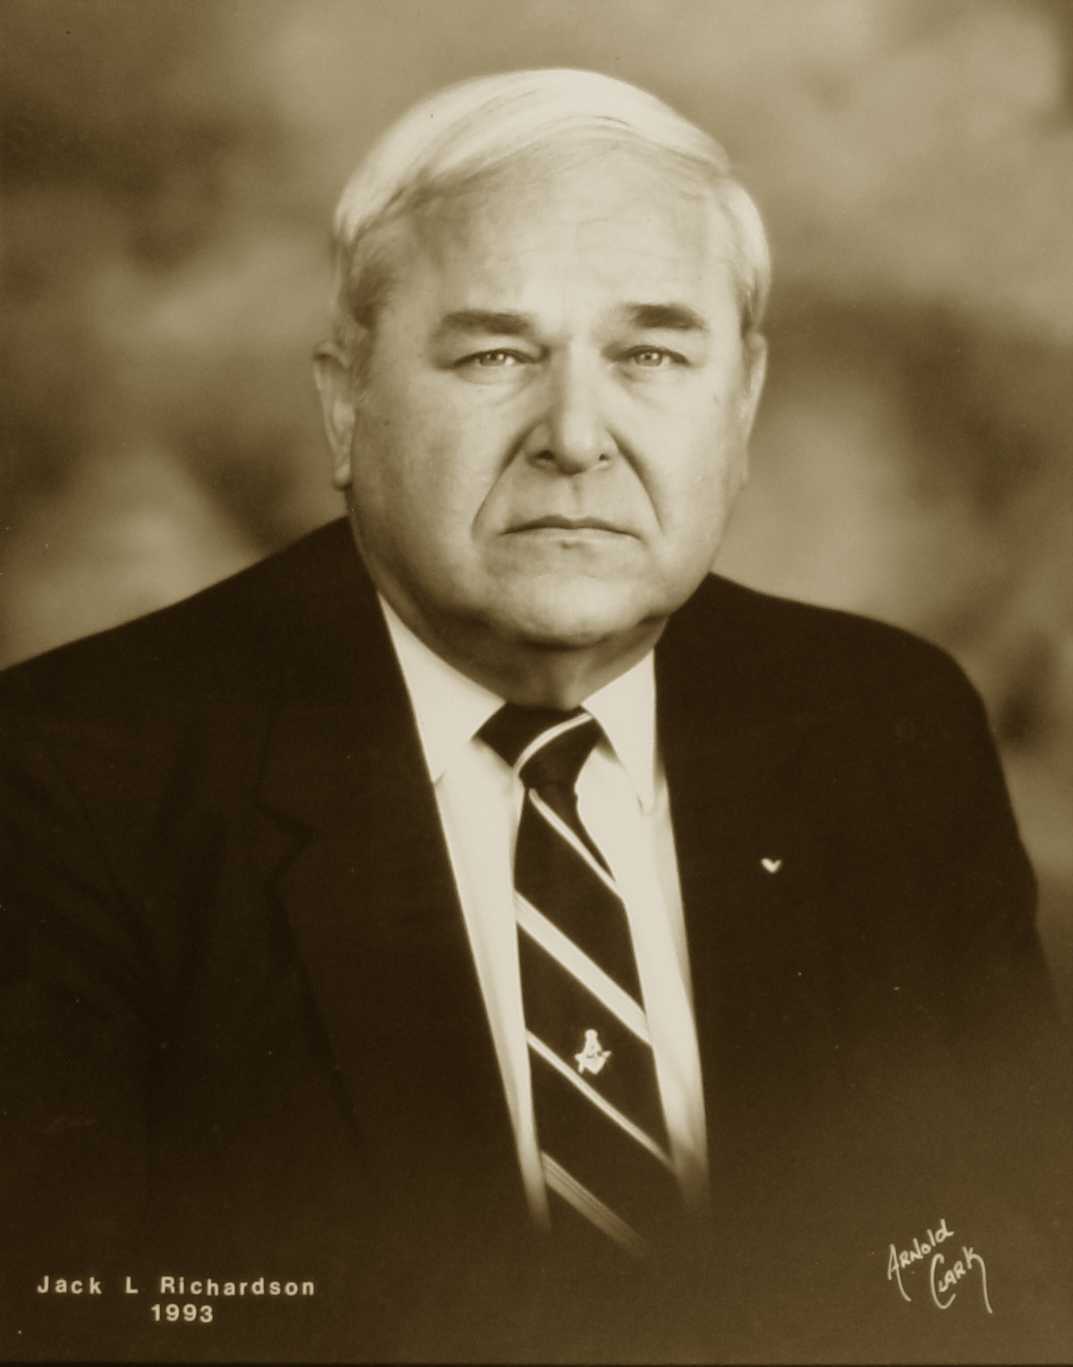 Jack L. Richardson, 1993